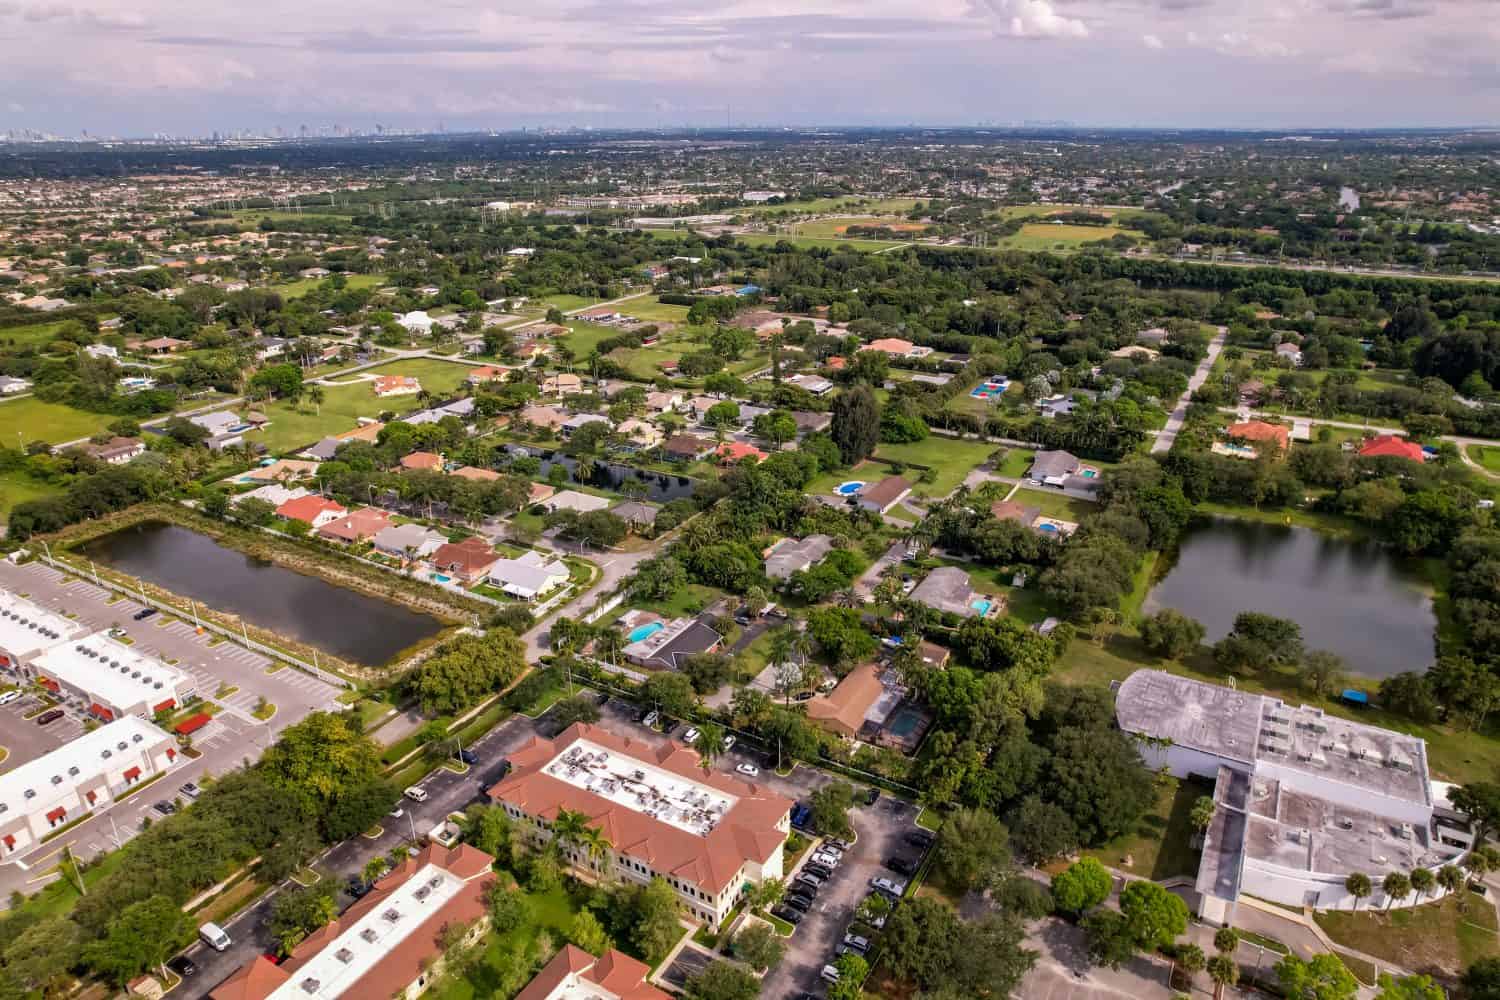 Residential neighborhoods Cooper City FL USA